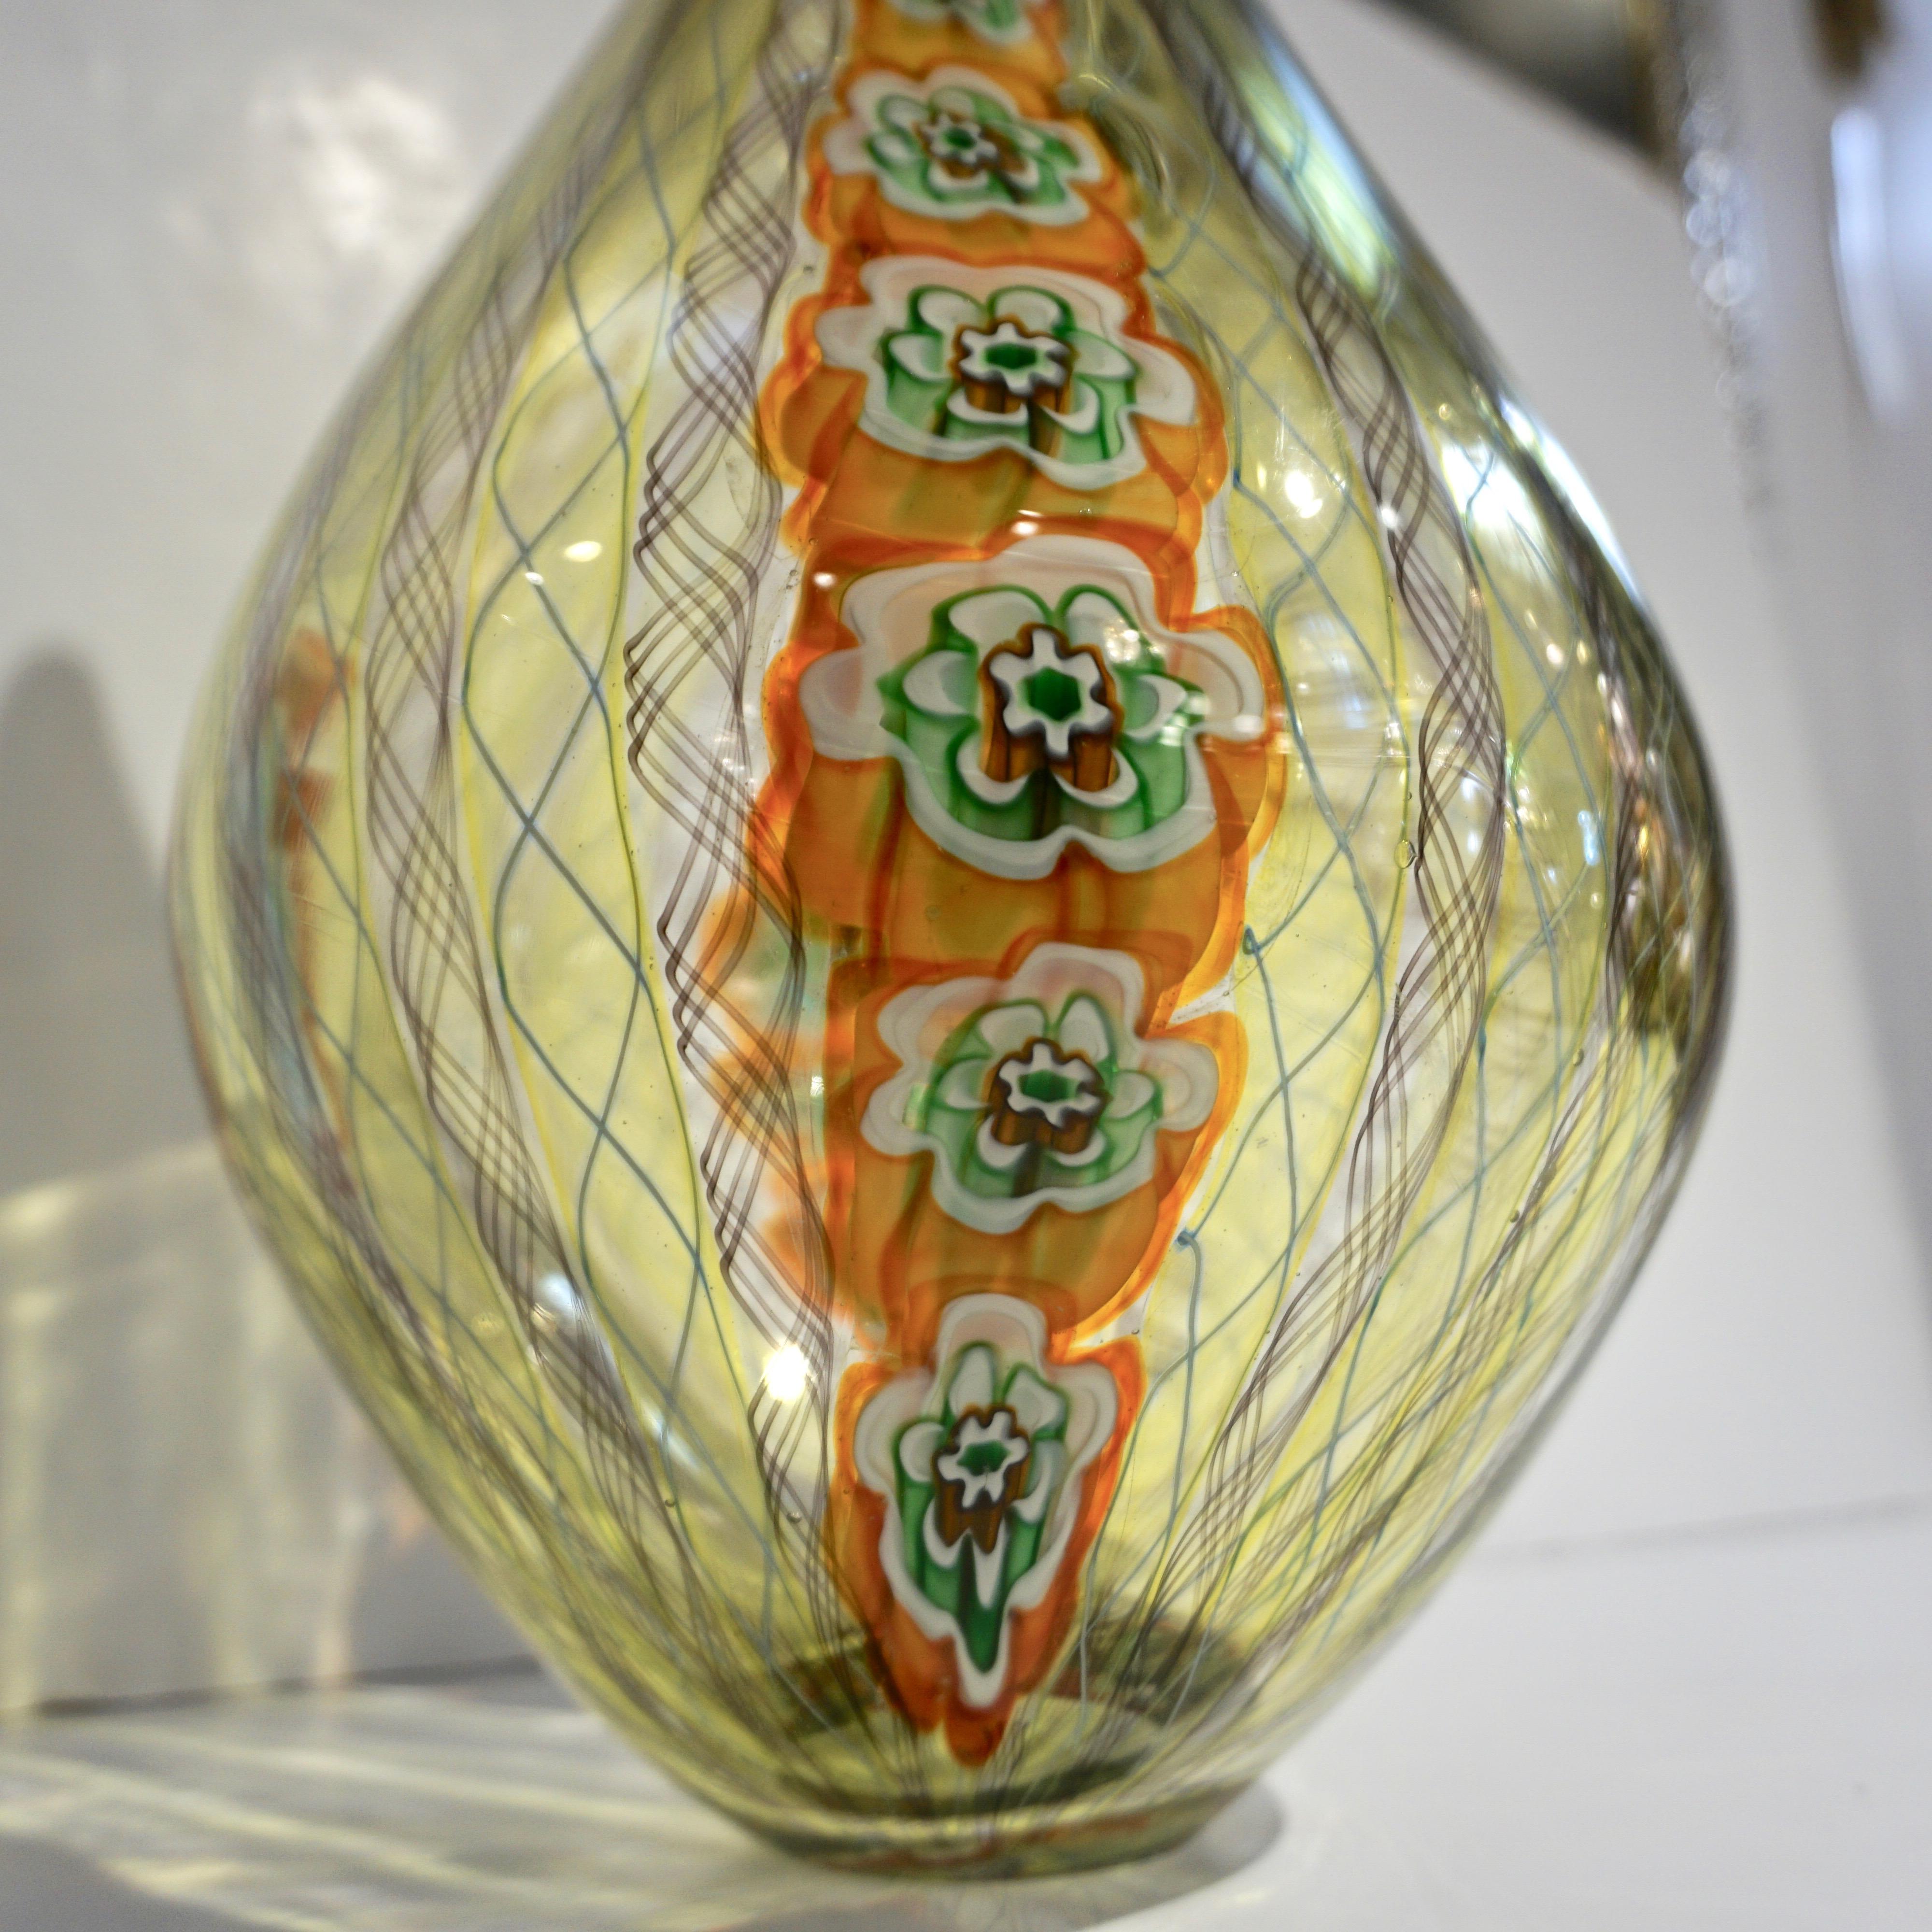 Tagliapietra Italian Modern Green Yellow Orange Murano Glass Drop Sculpture Vase For Sale 6